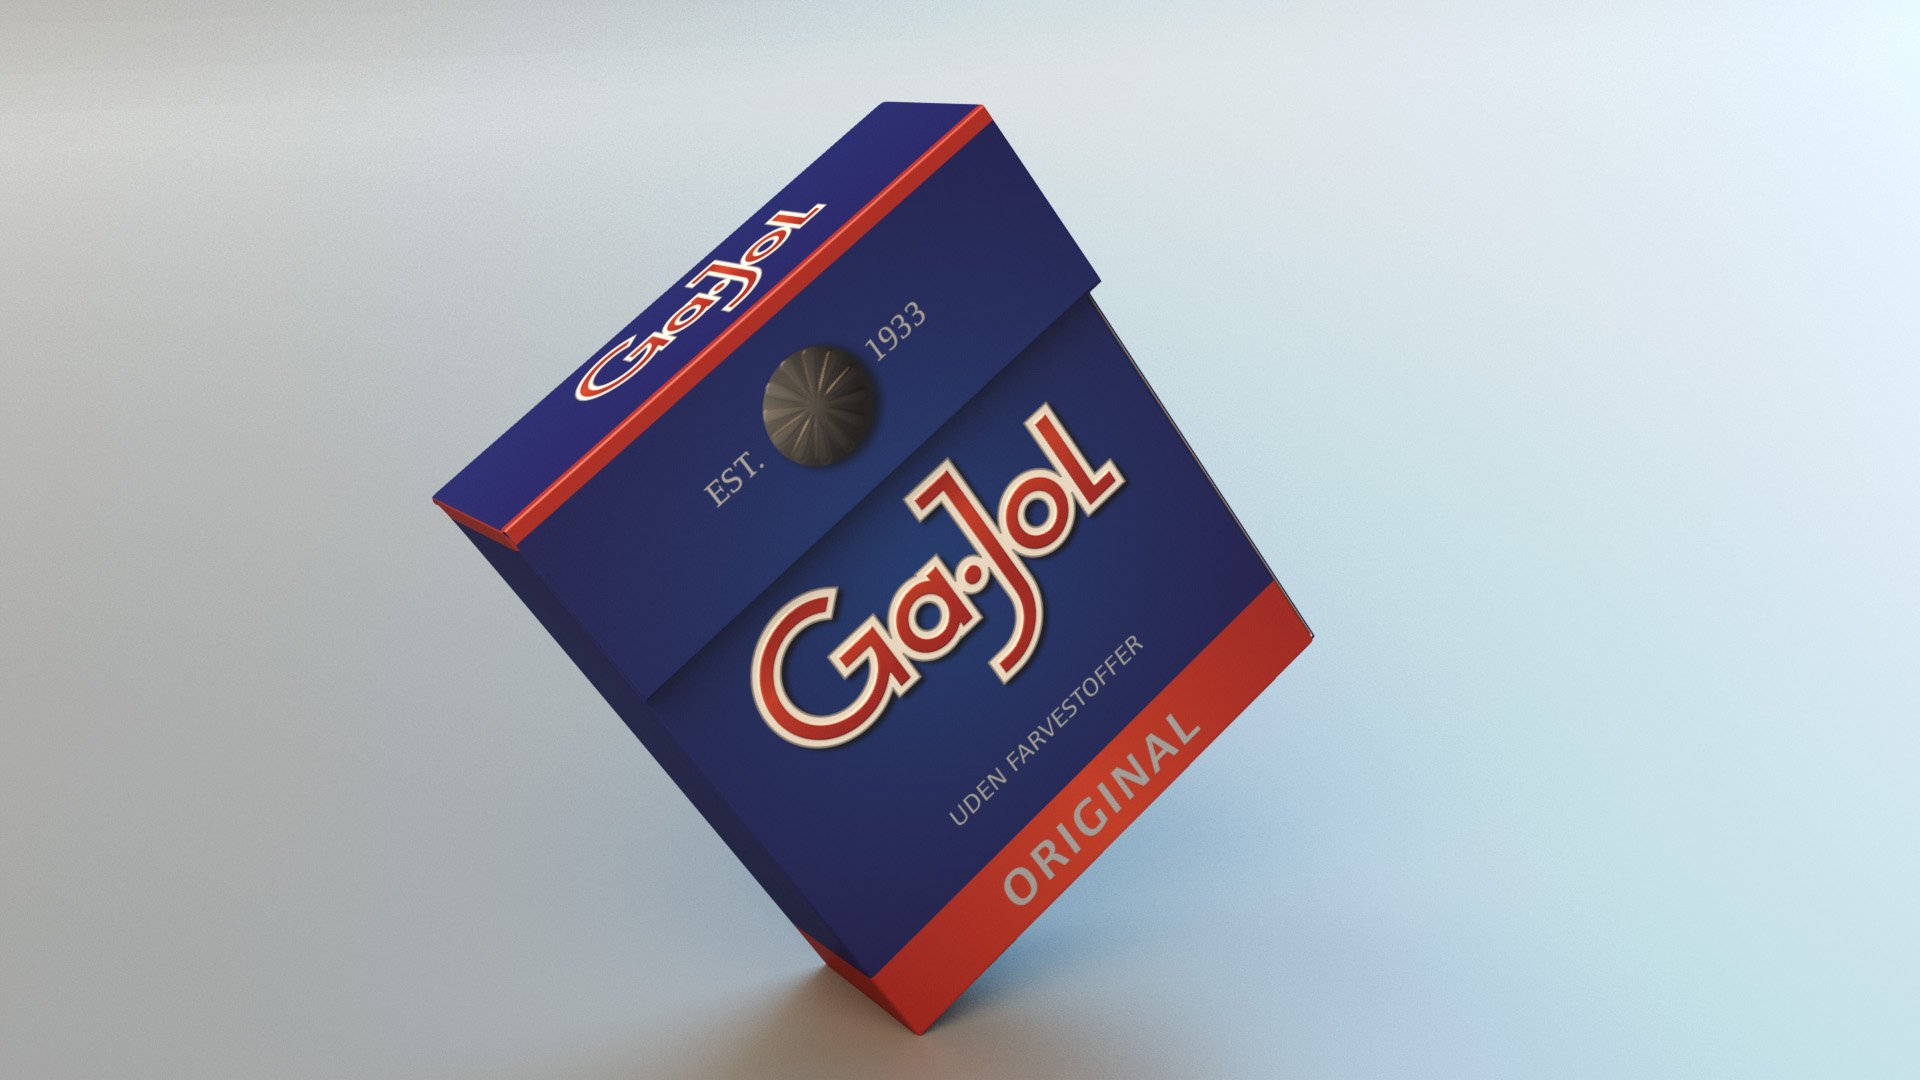 Gajol packaging design for TOMS Group by LOOP Associates